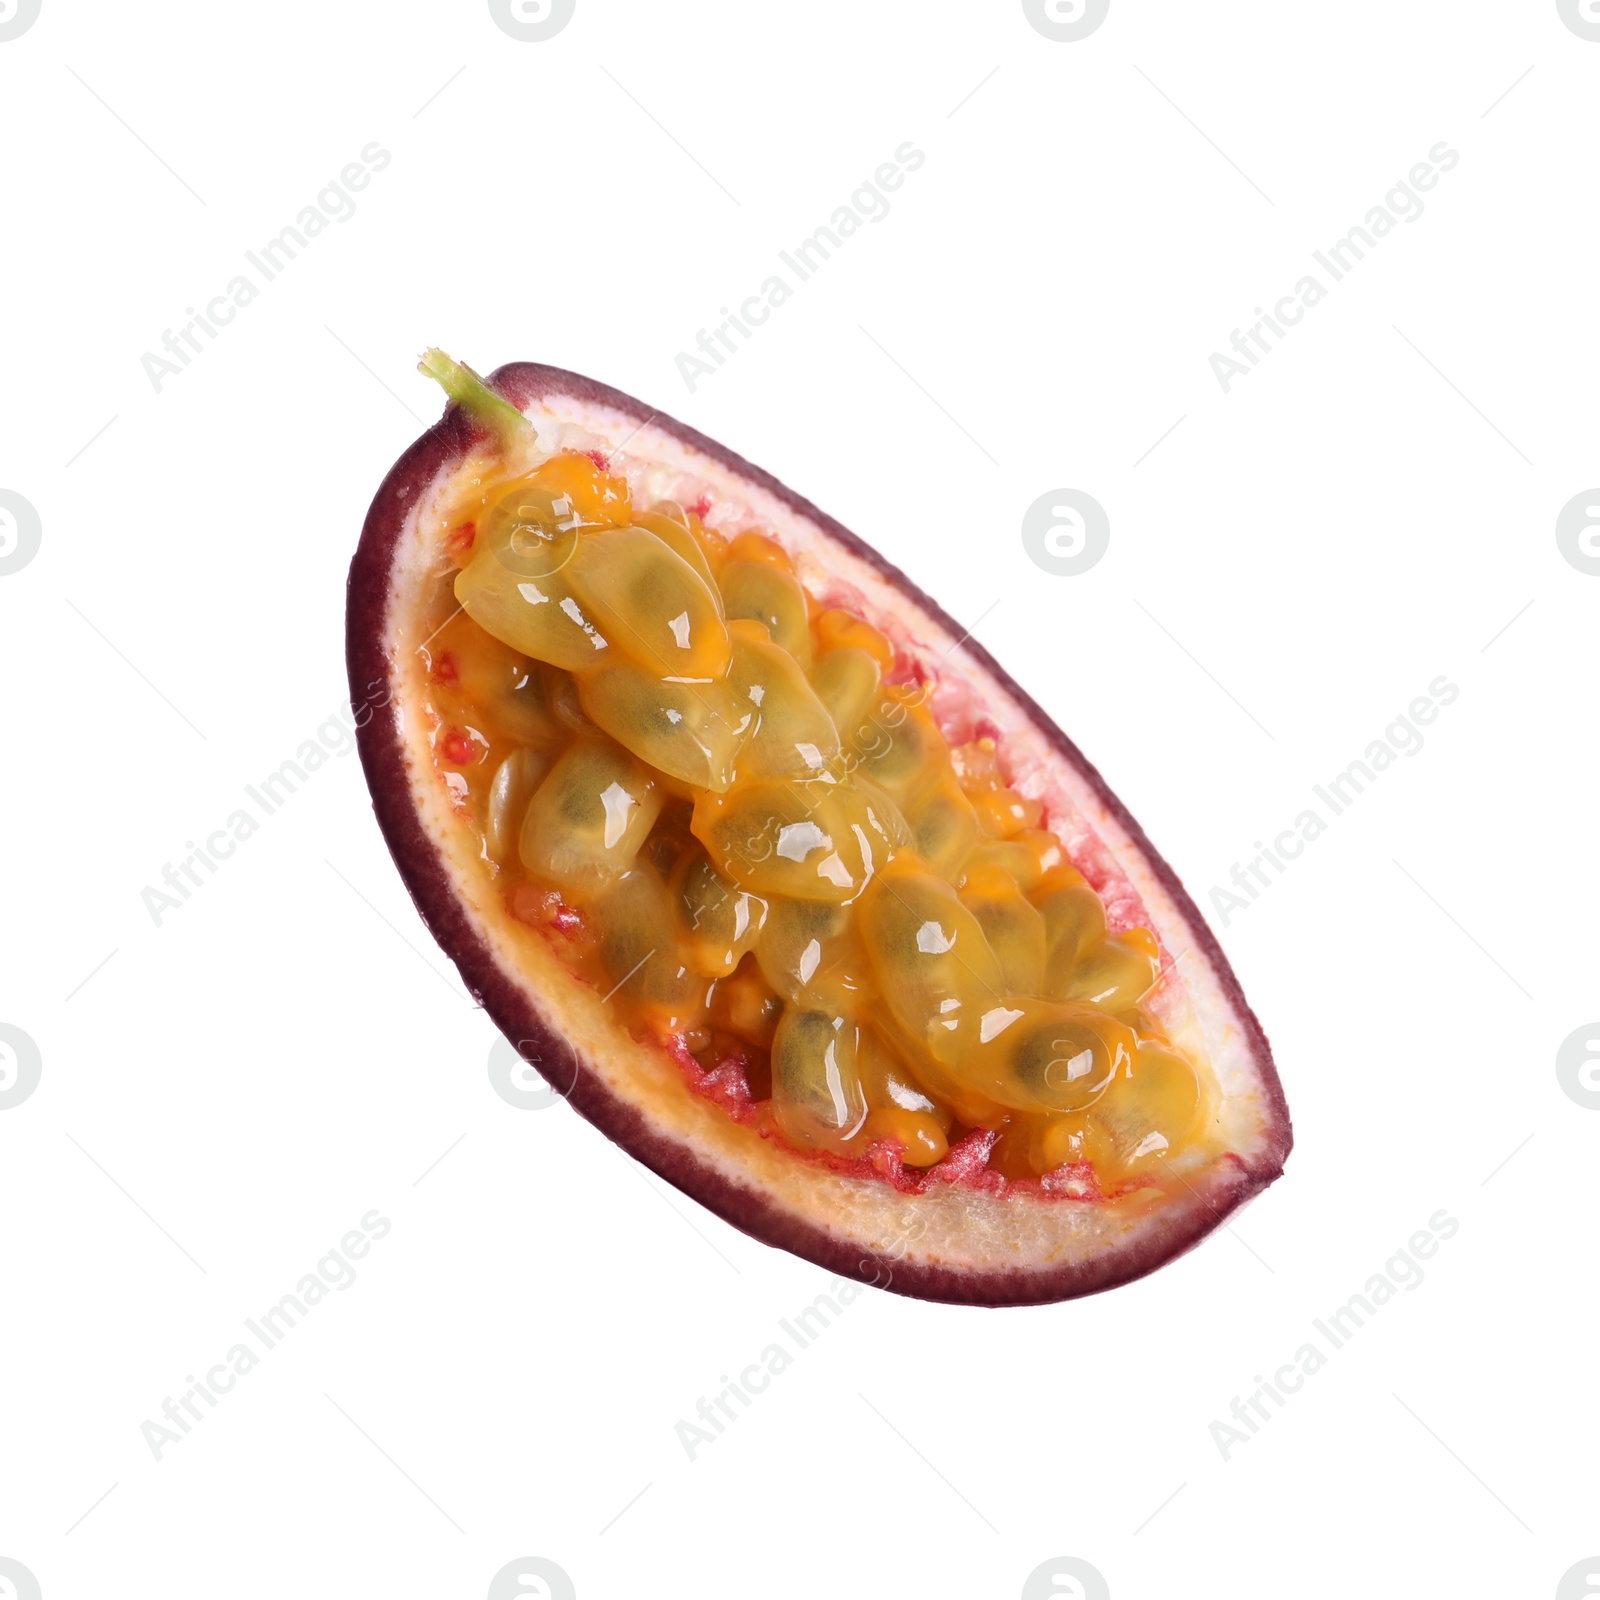 Photo of Slice of passion fruit isolated on white